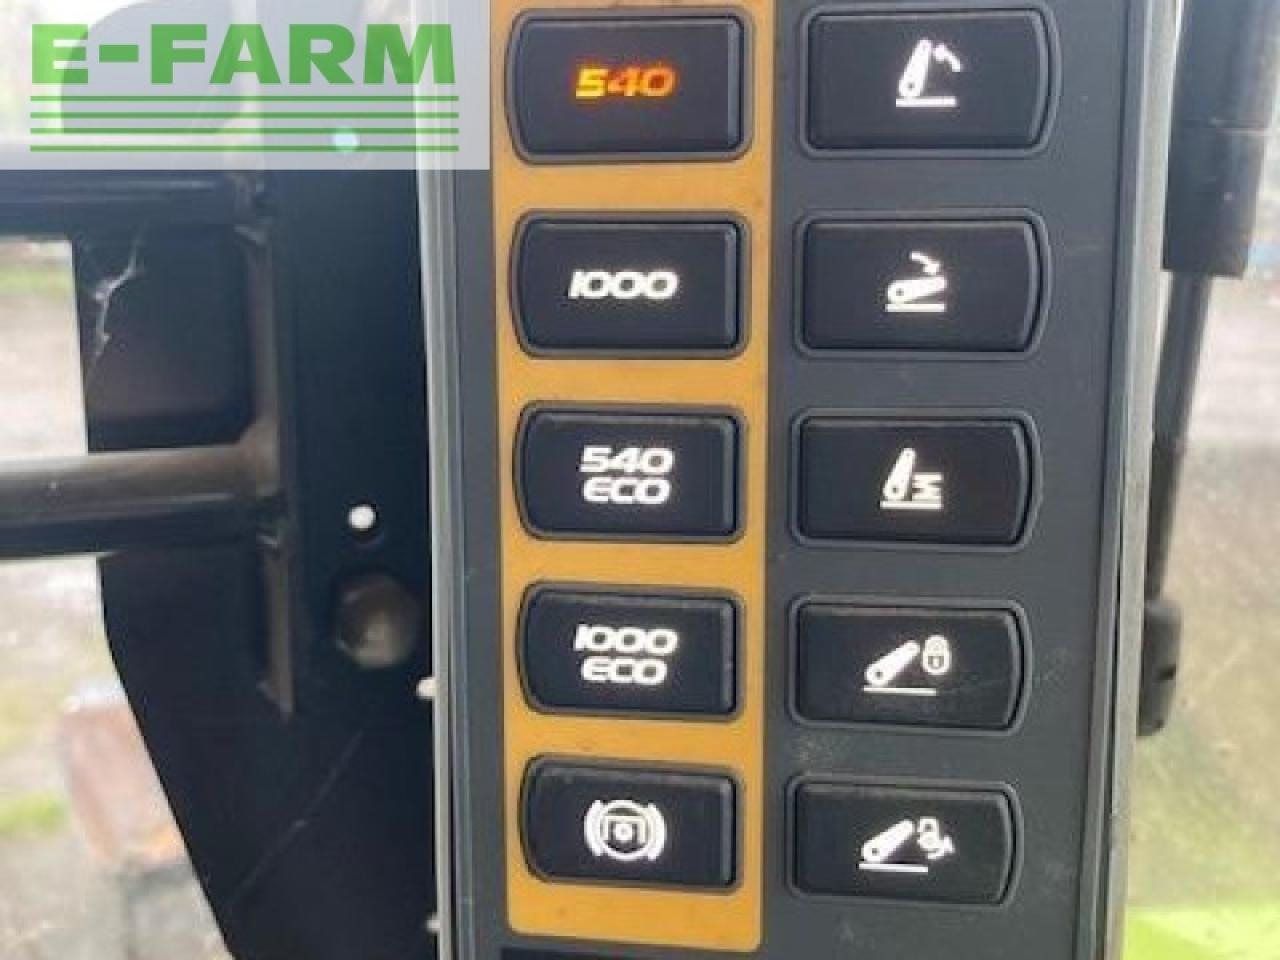 Farm tractor CLAAS 650 CEBIS